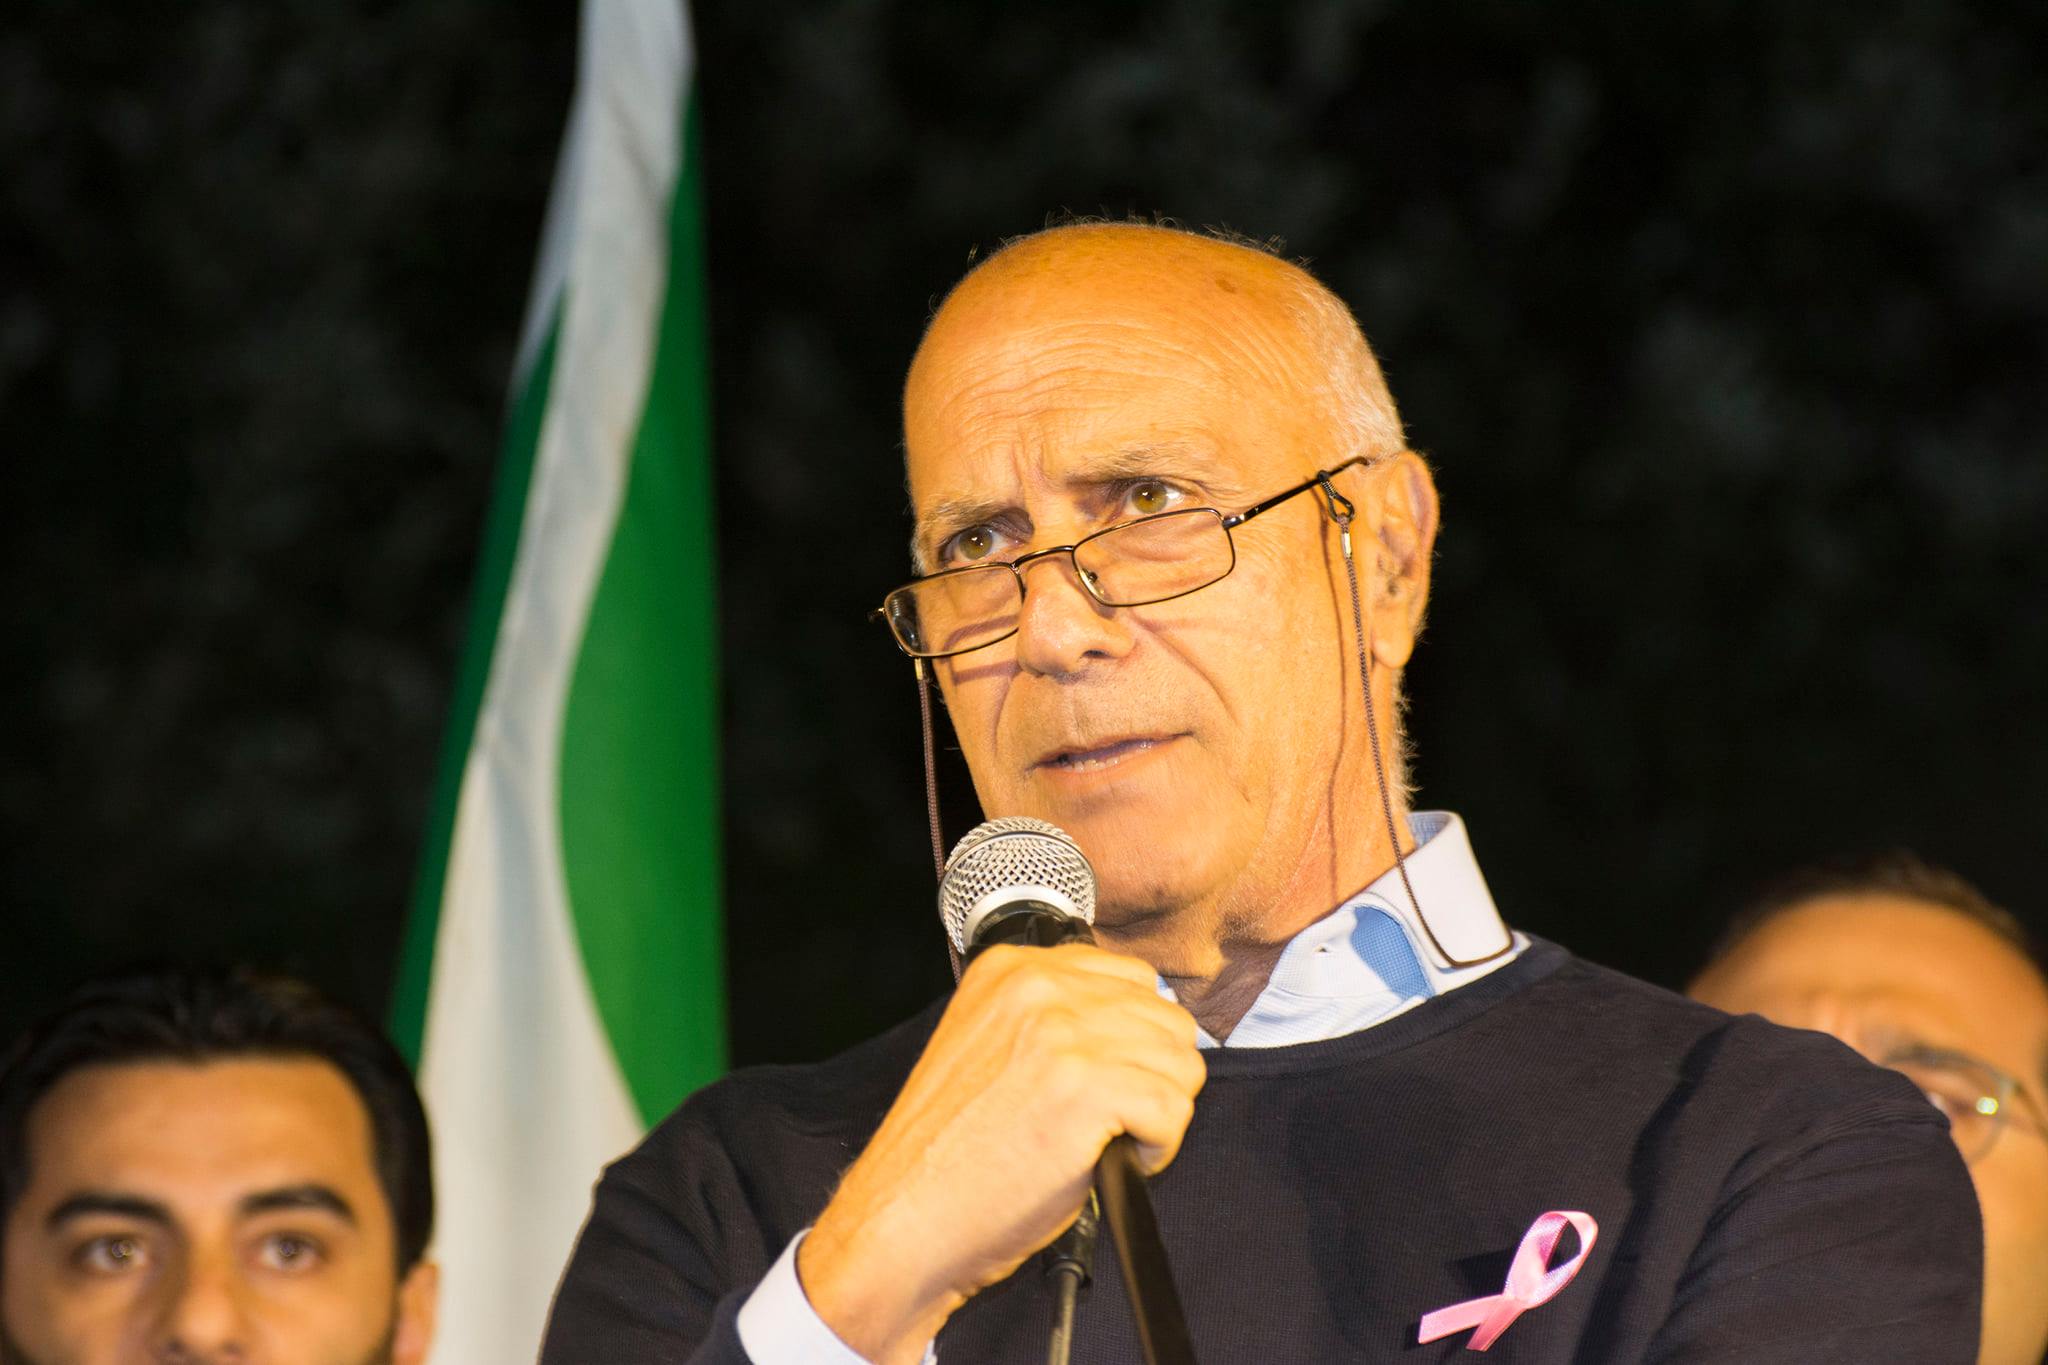 Il Sindaco di Cerignola, Francesco Bonito, ph. DauniaNews.it